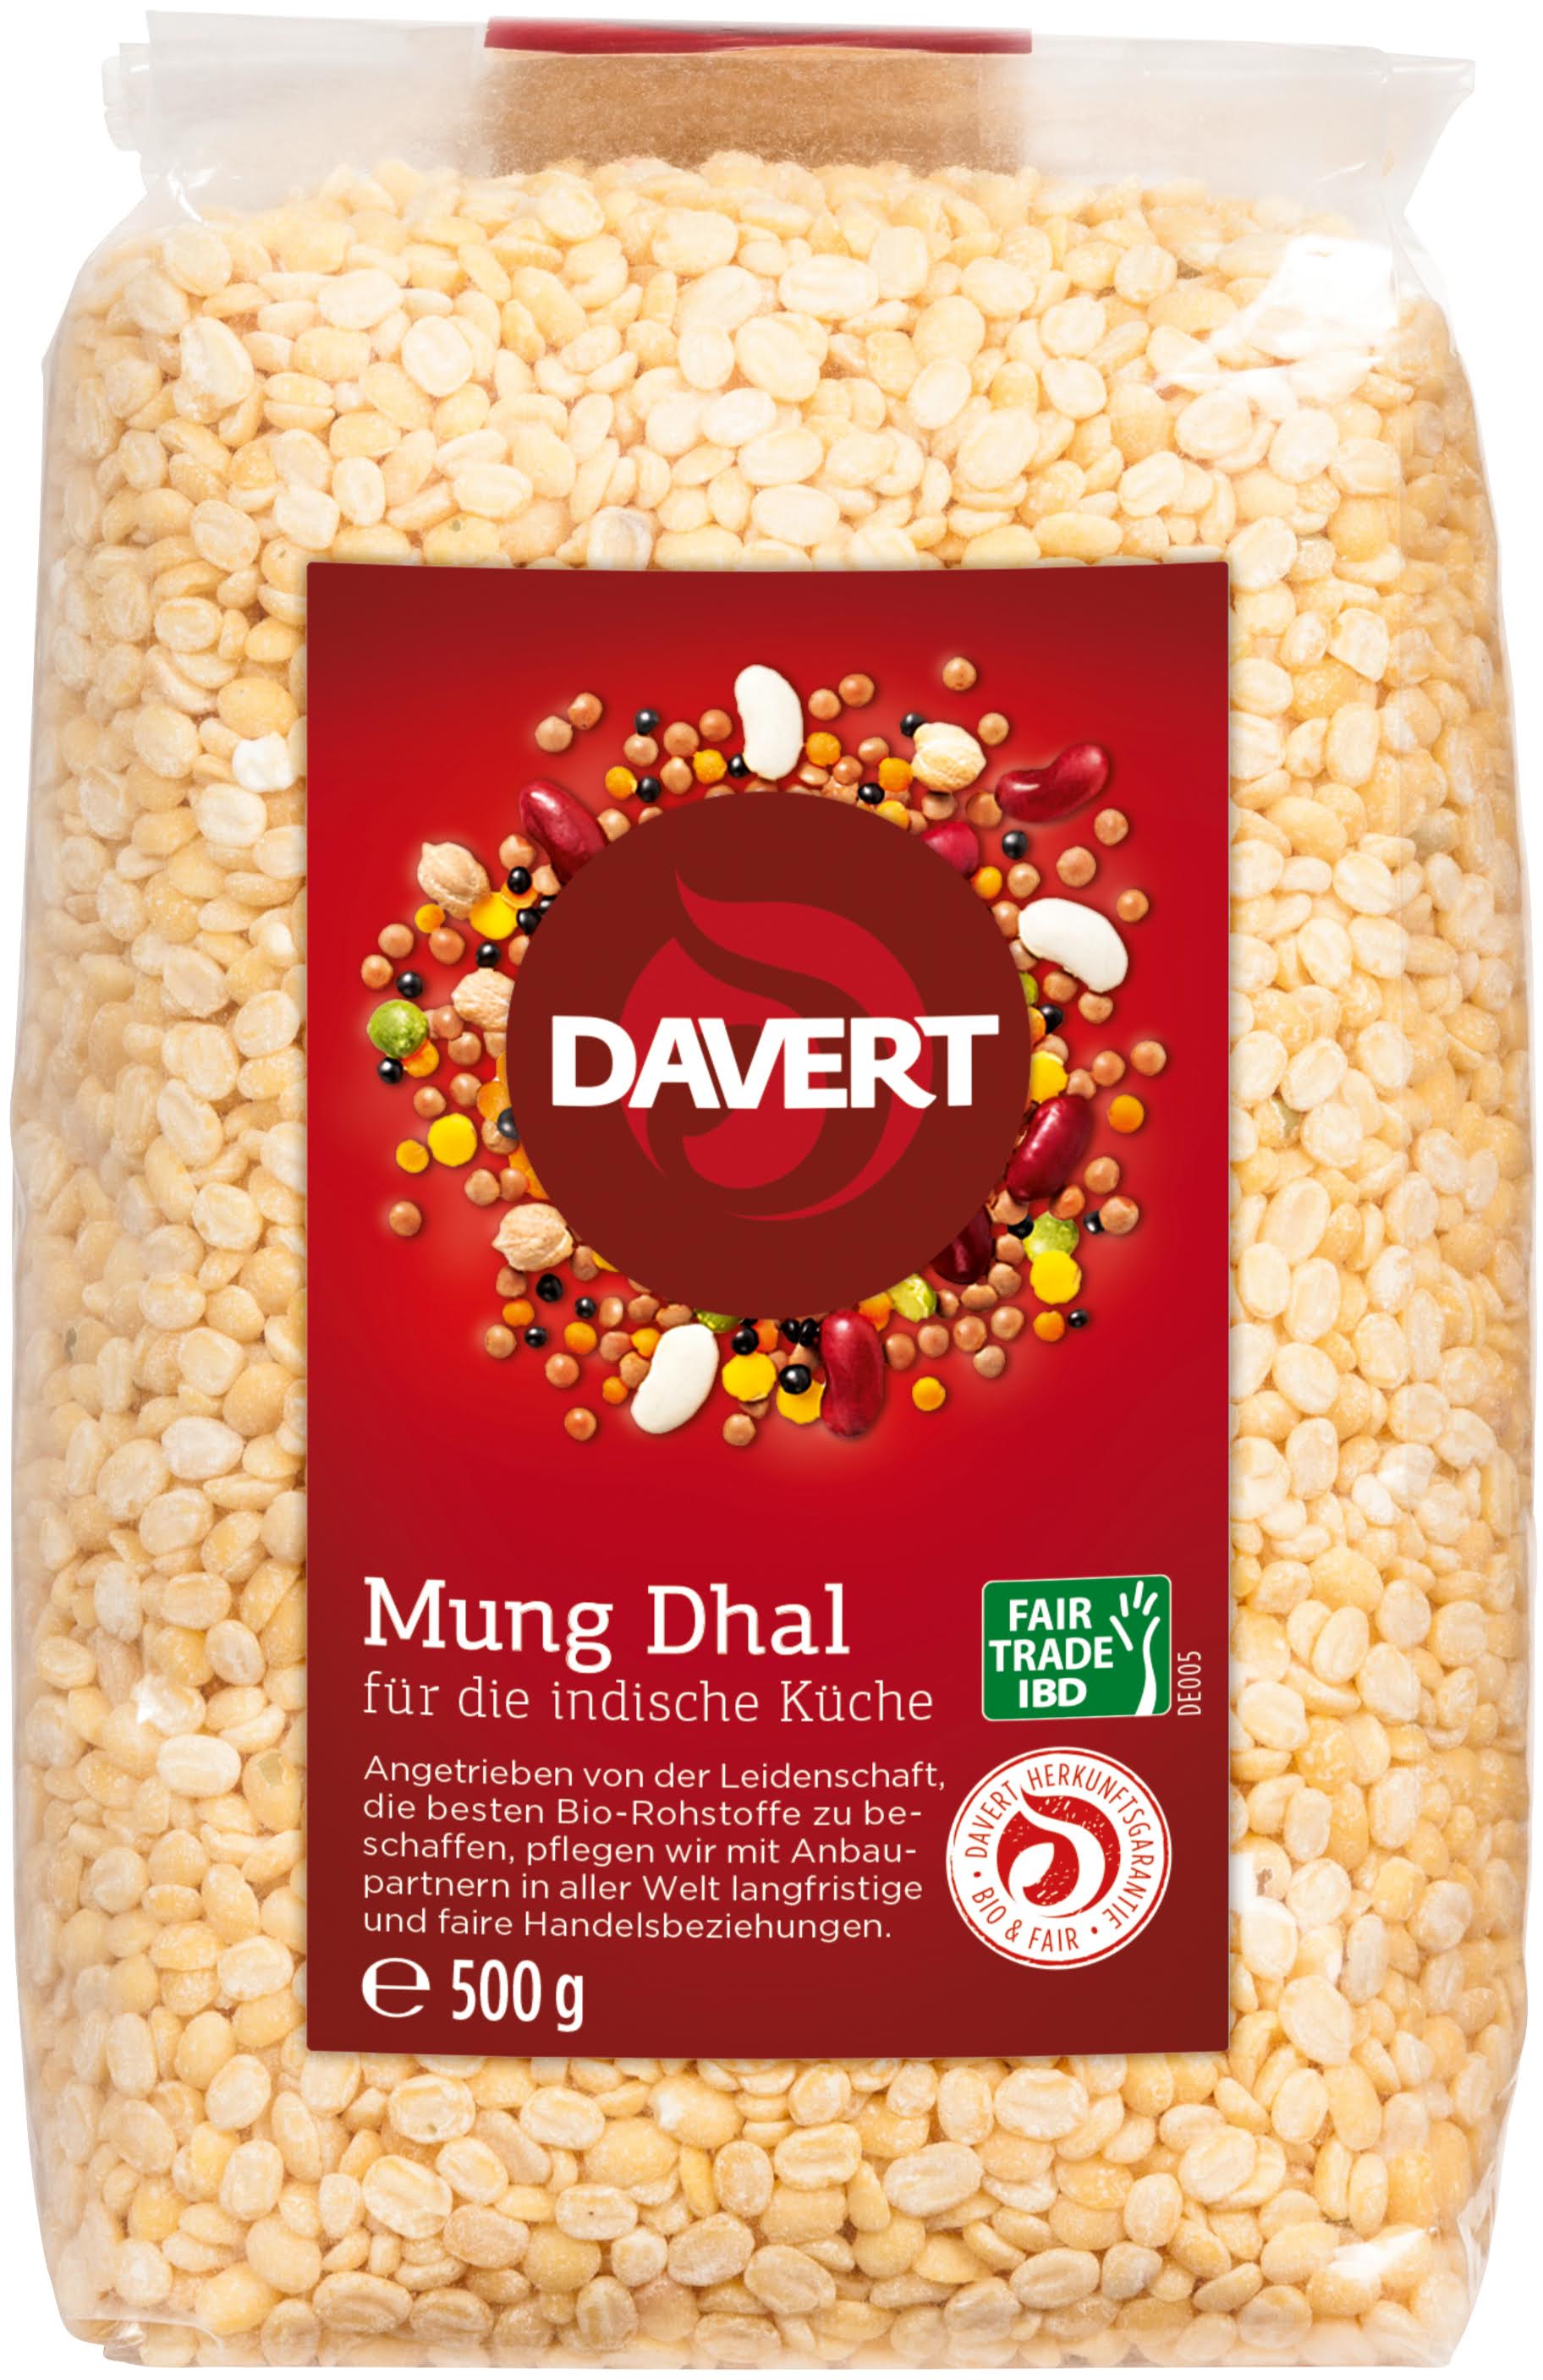 Mung Dhal IBD (Fairtrade)